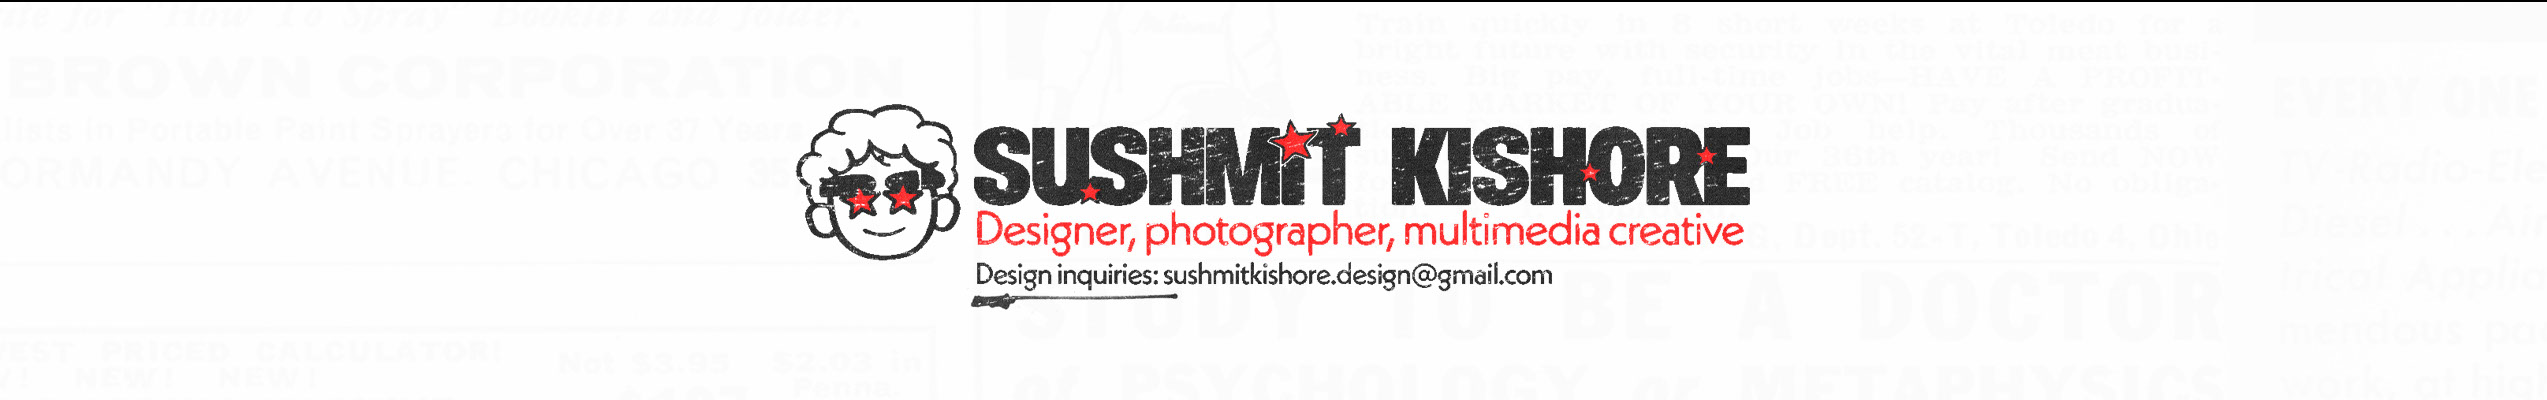 Sushmit Kishore's profile banner